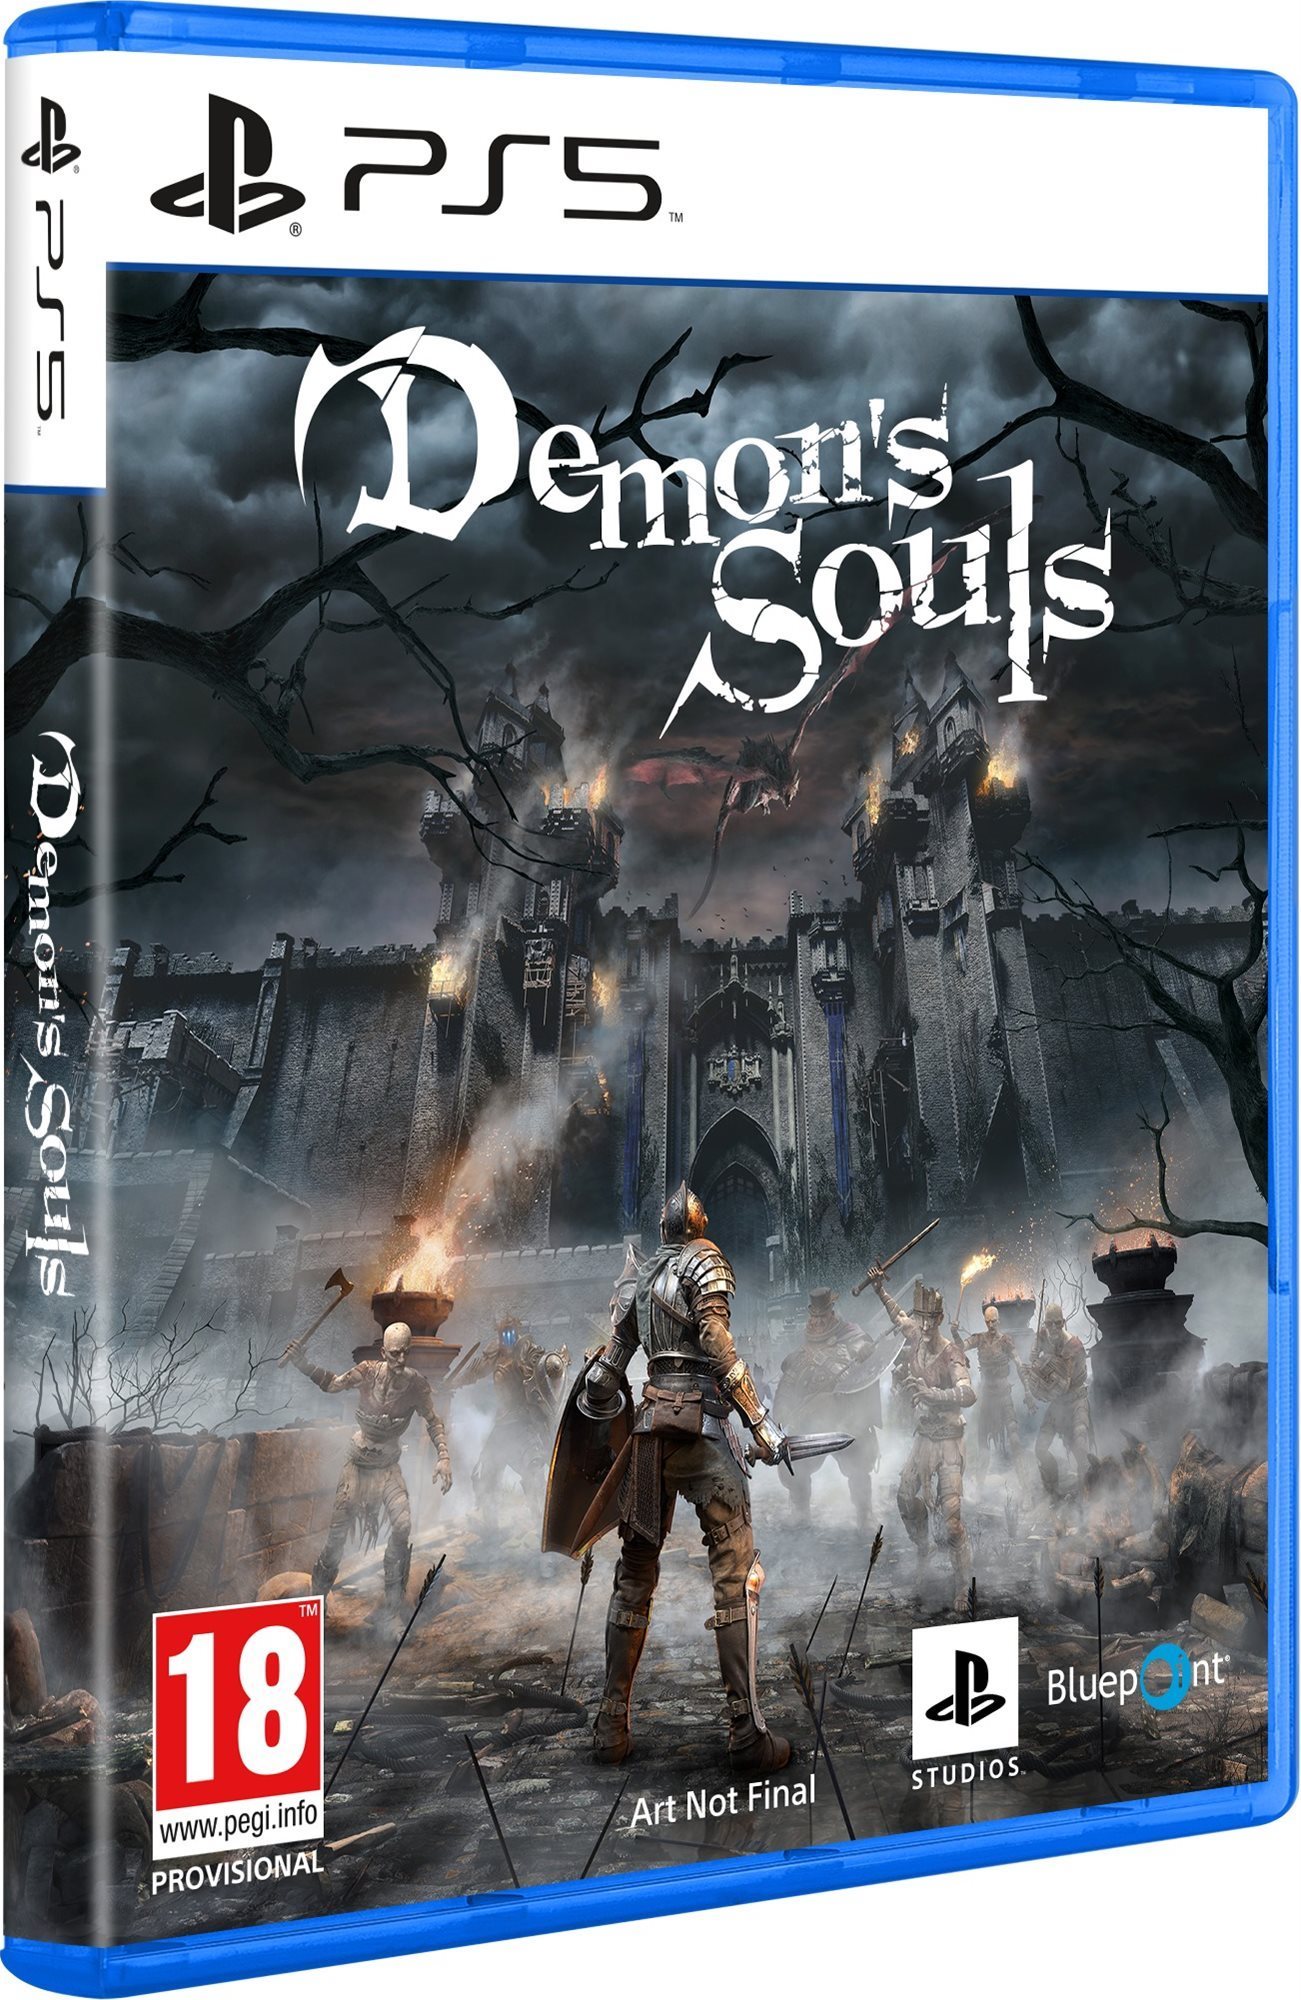 Demons Souls Remake - PS5